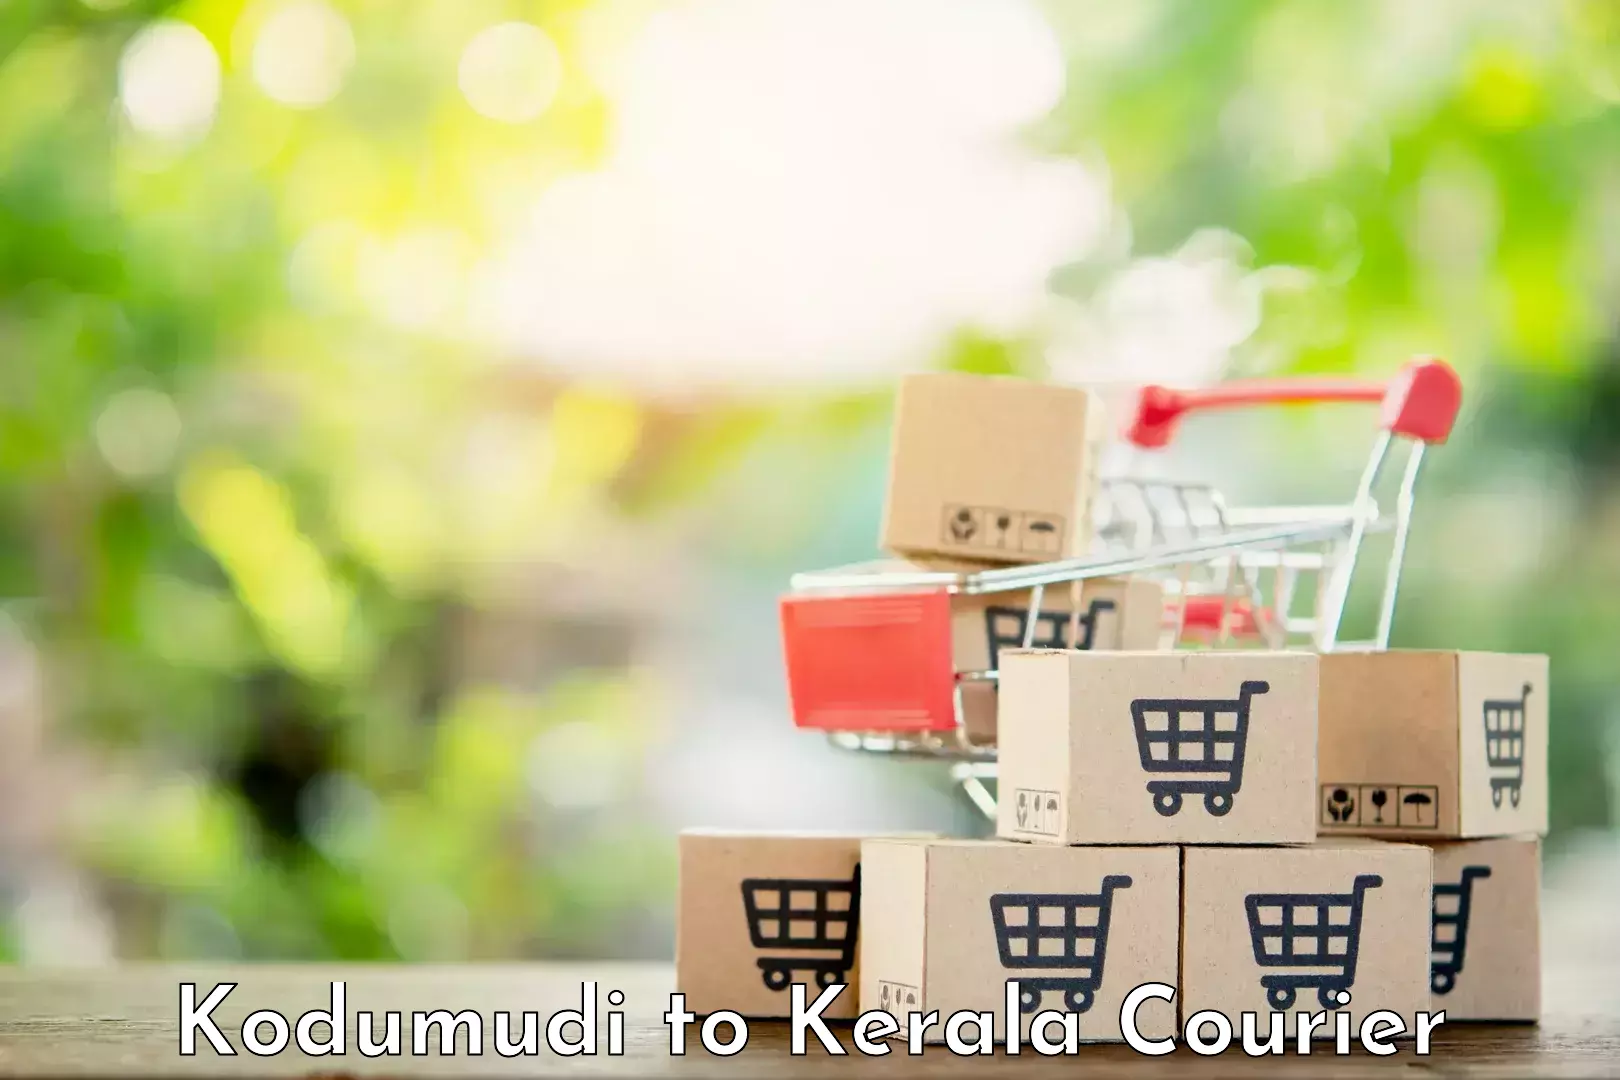 Modern courier technology Kodumudi to Calicut